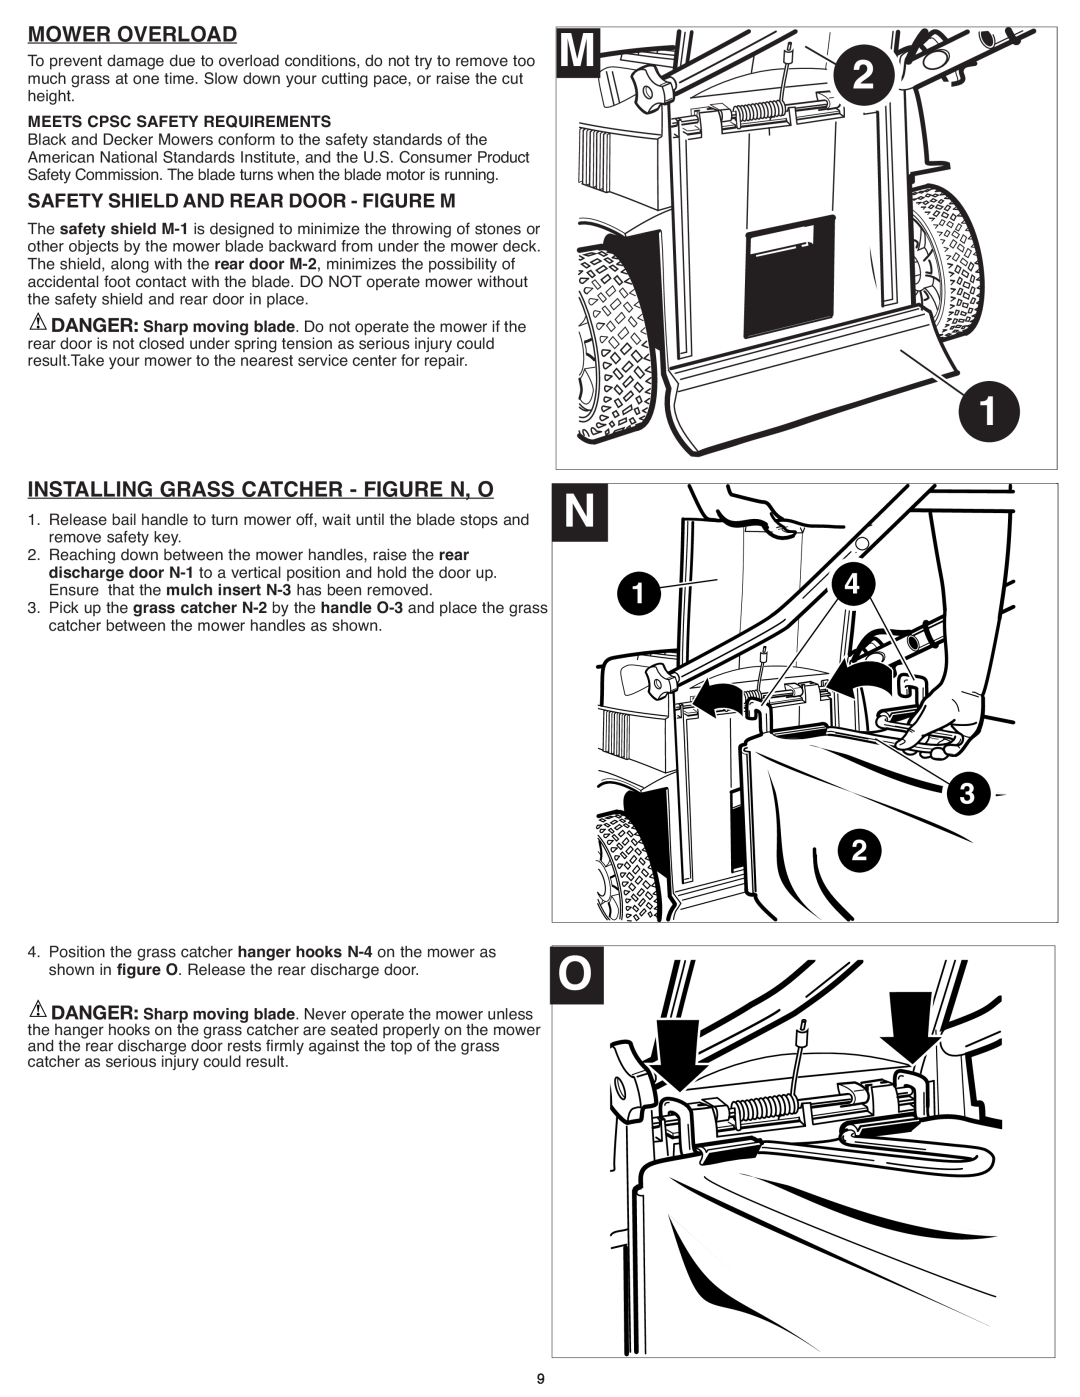 Black & Decker CM1936ZF2 Mower Overload, Installing Grass Catcher - Figure N, O, Safety Shield And Rear Door - Figure M 